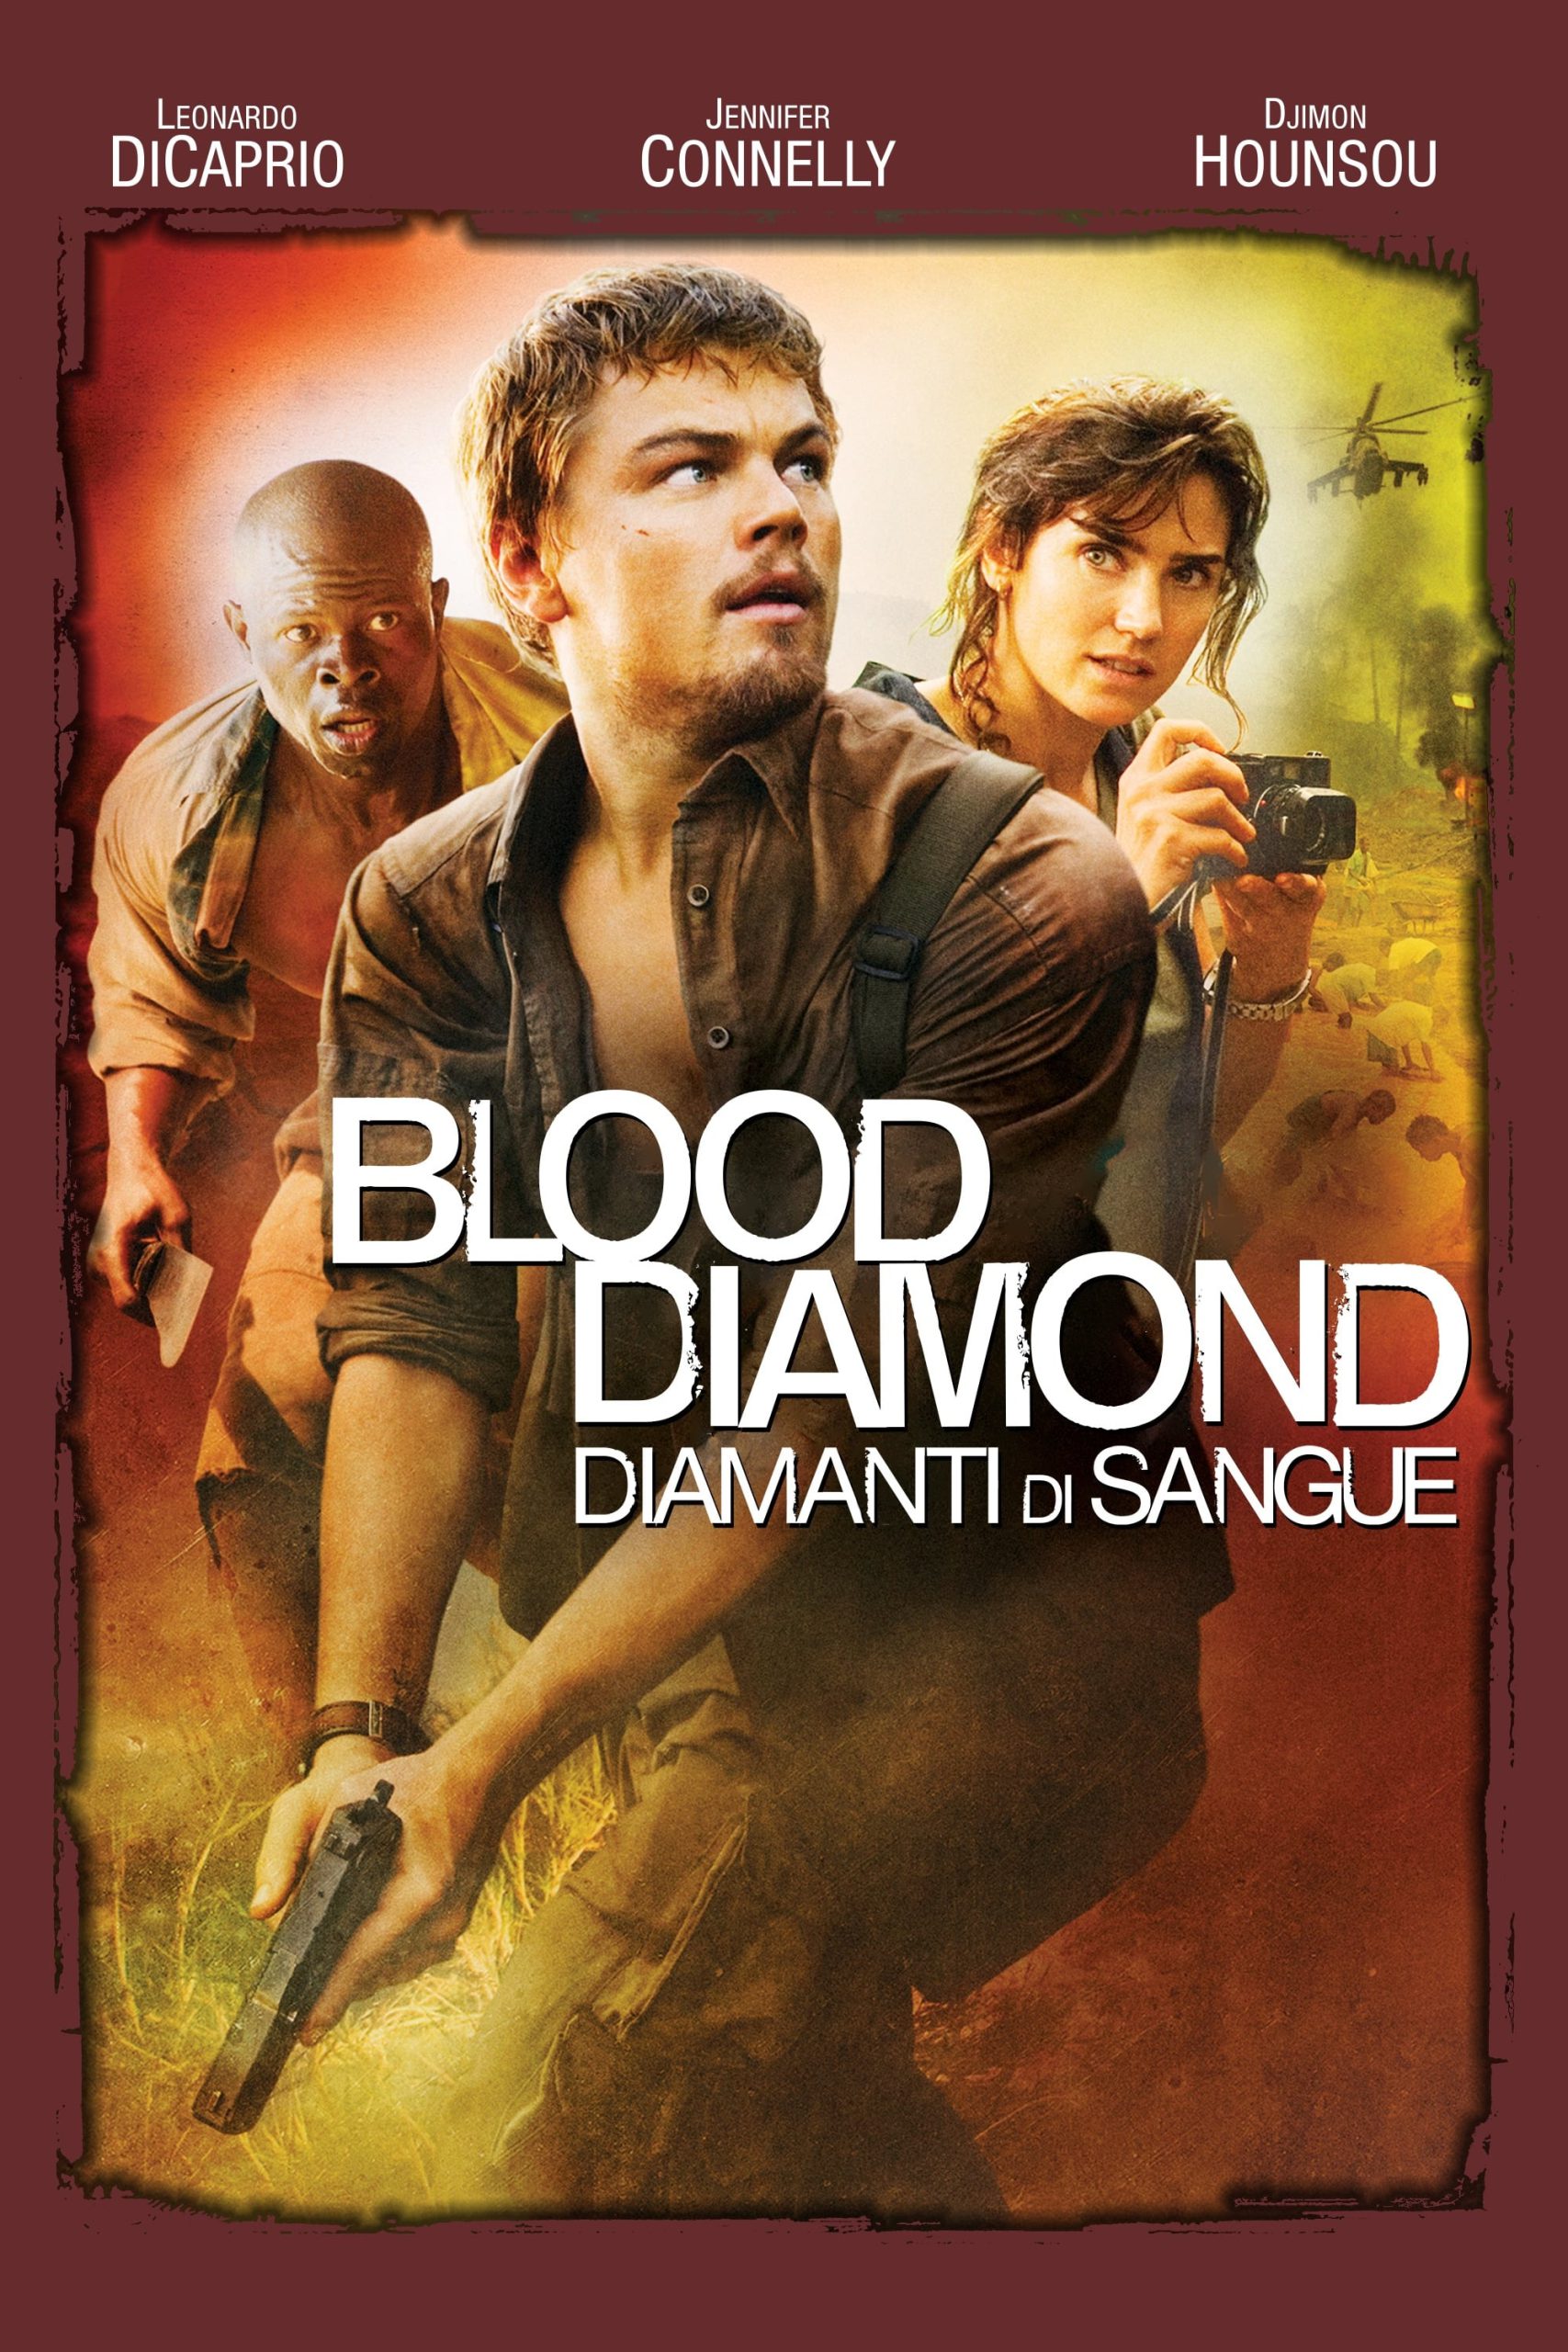 Blood Diamond – Diamanti di sangue [HD] (2006)